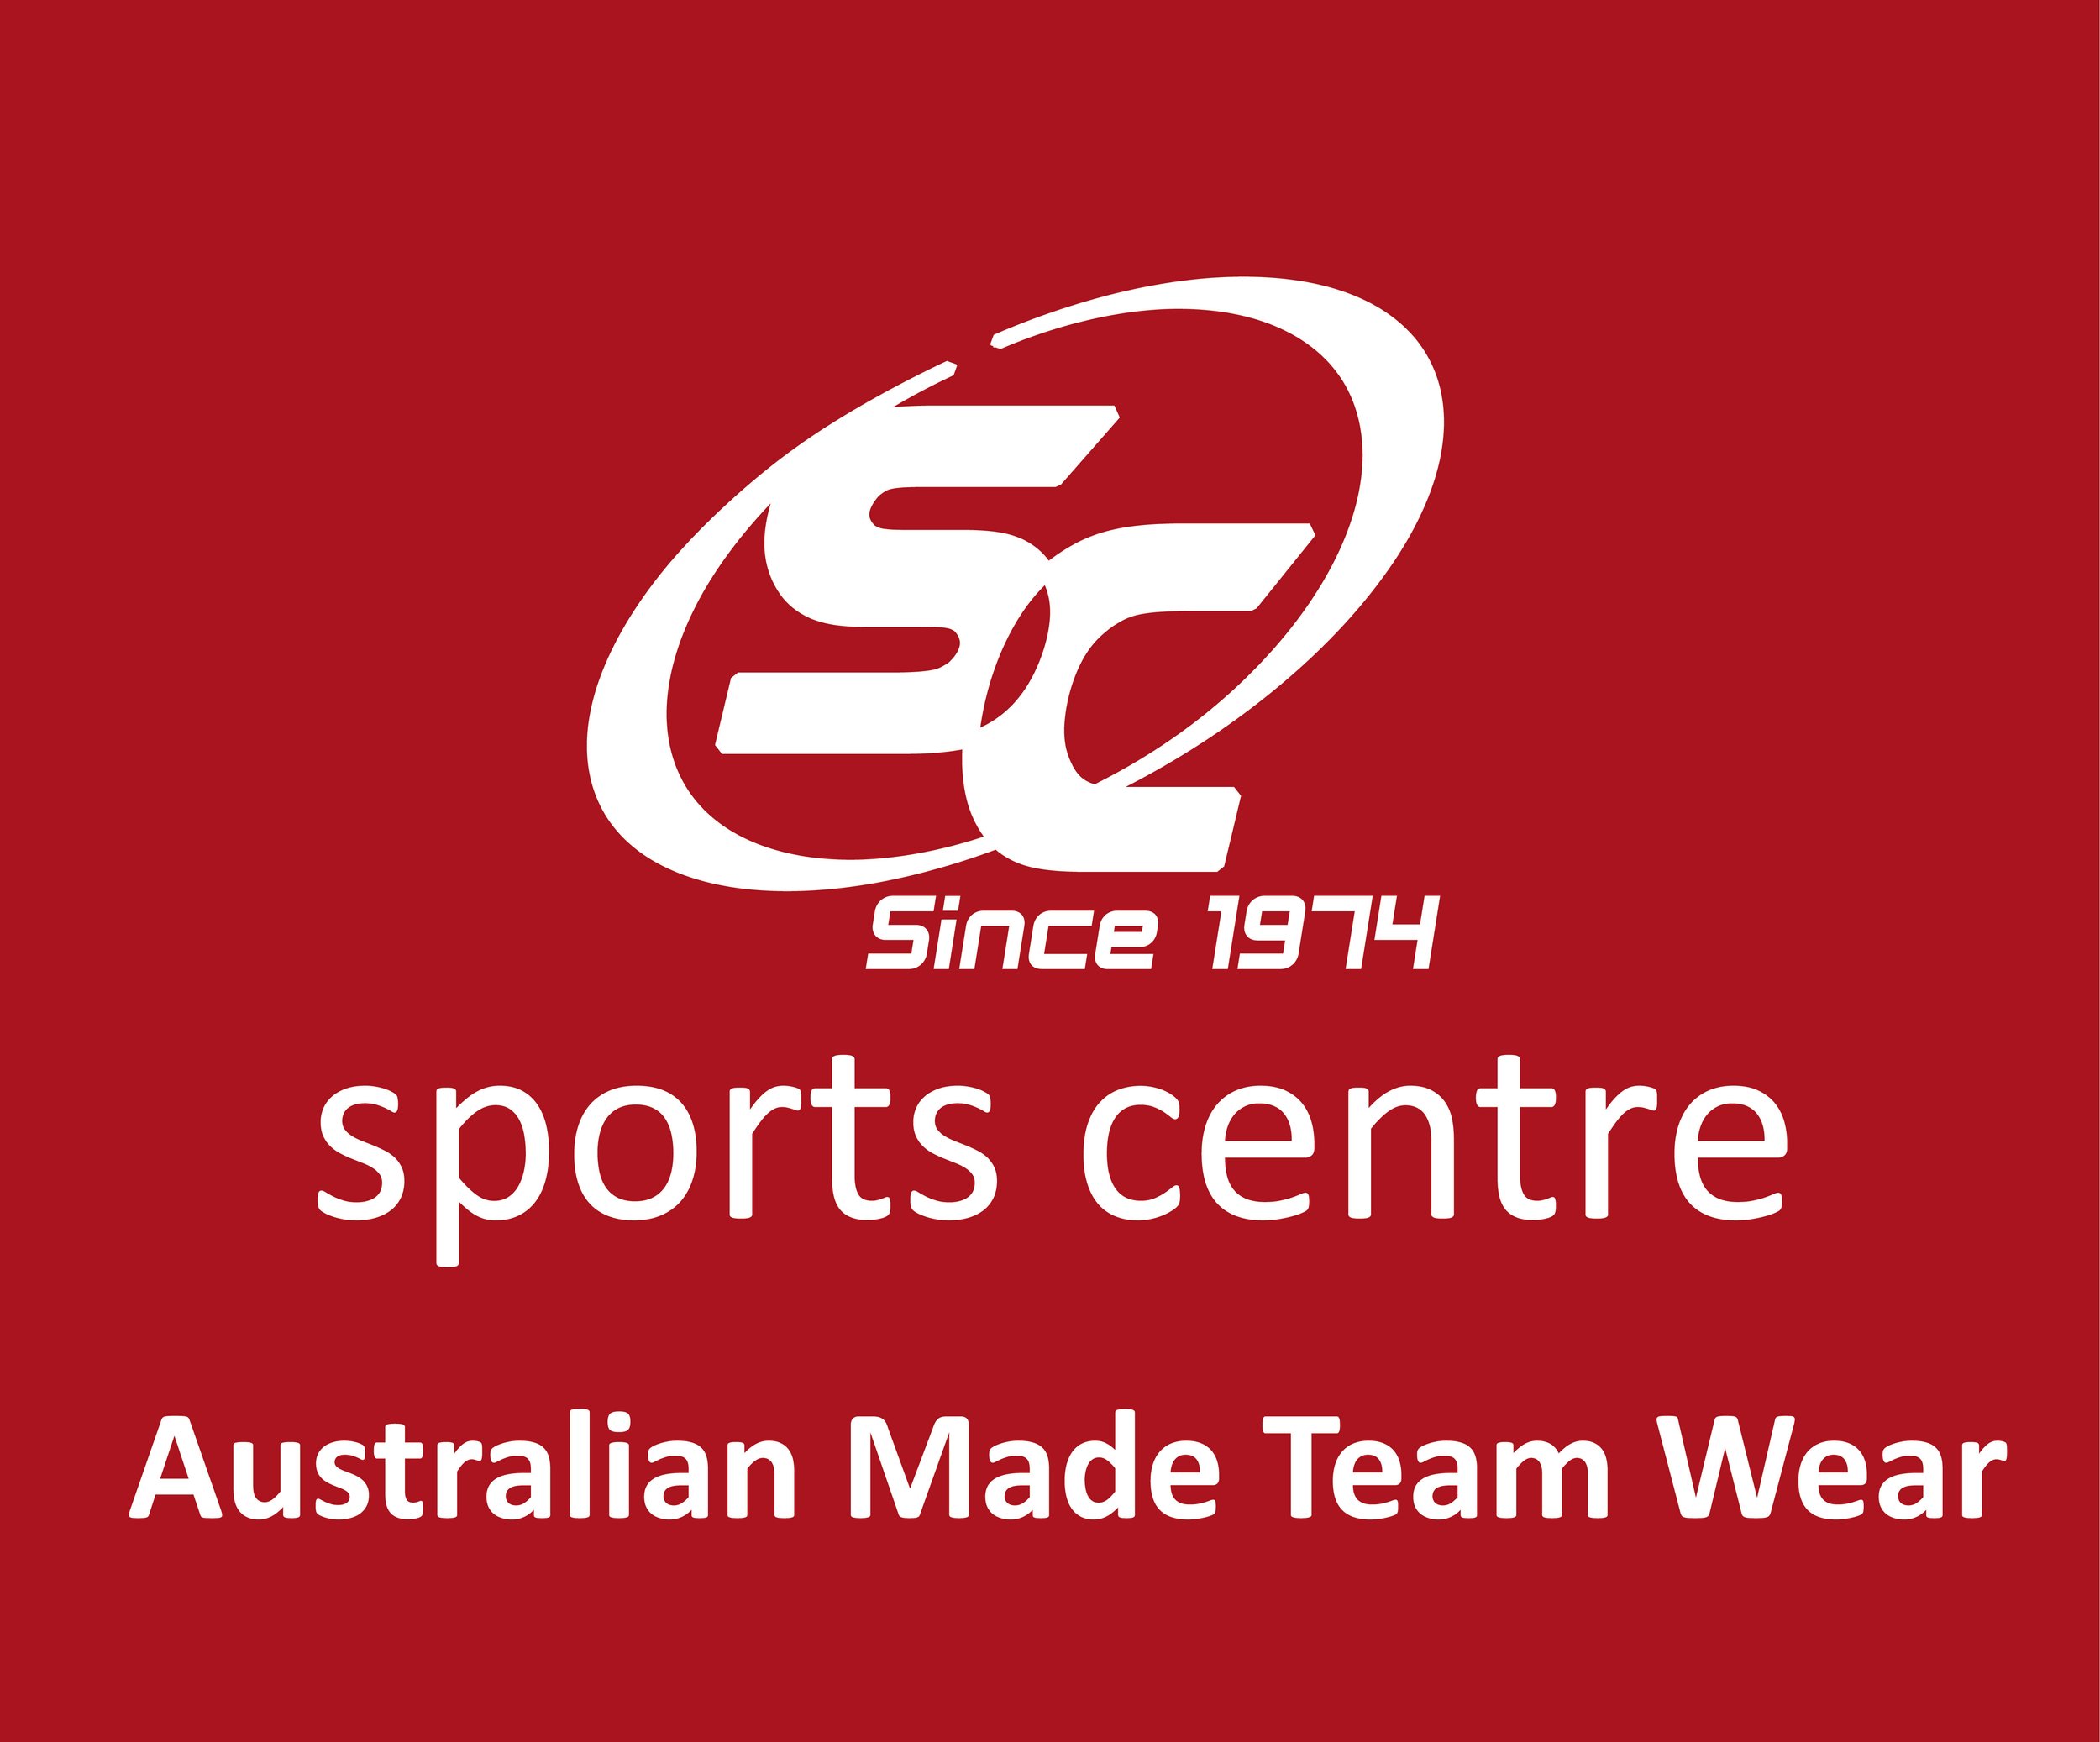 Sports Centre Logos-01.jpg